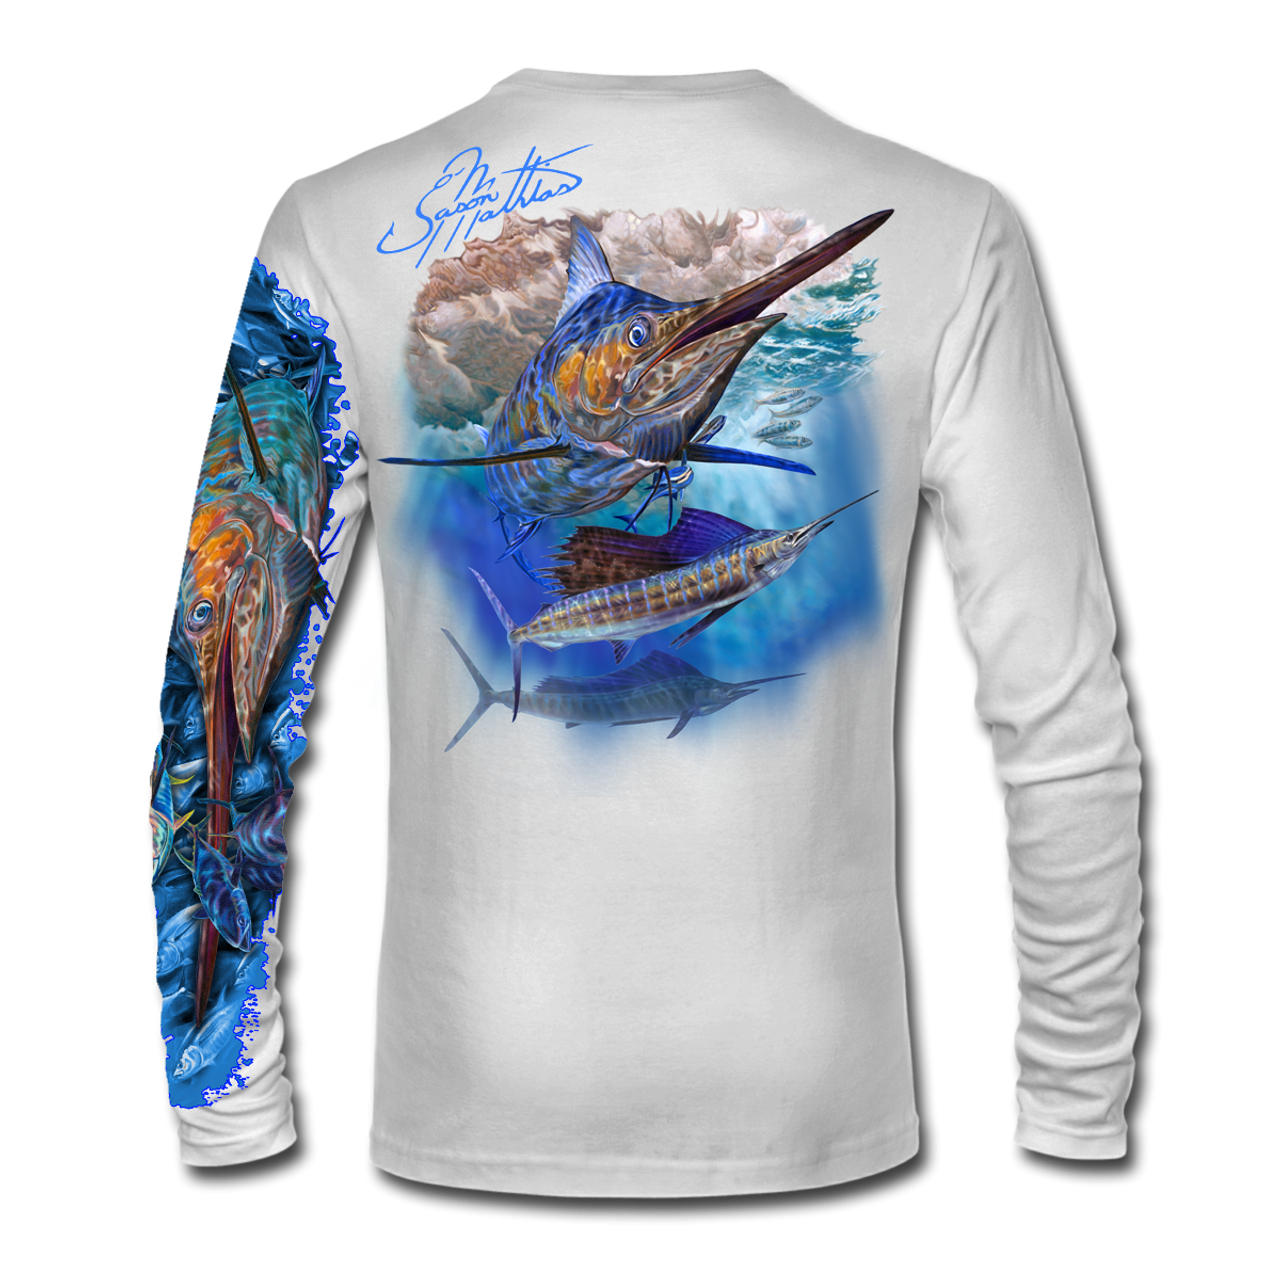 LS High Performance tee shirt (Marlin Sailfish) - Jason Mathias Art Studios